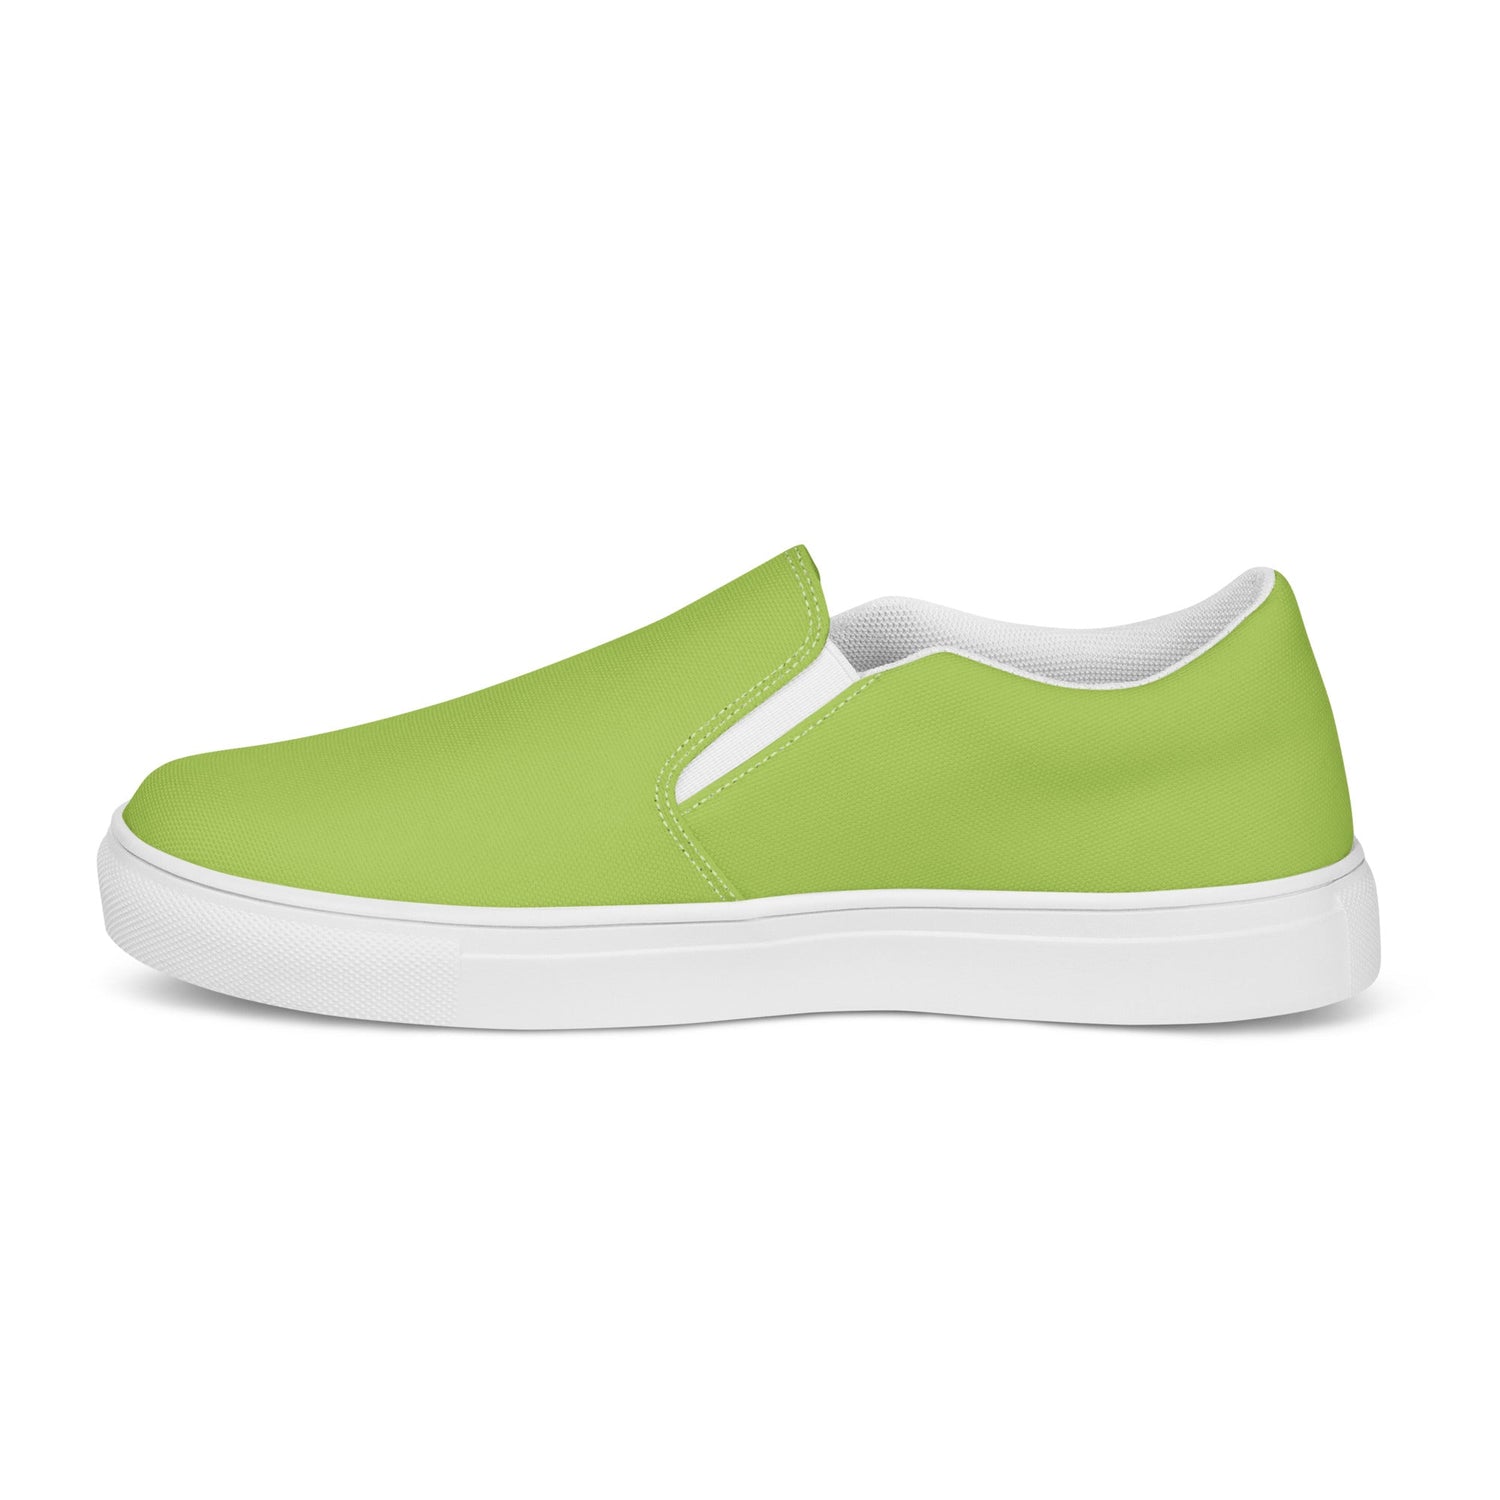 klasneakers Men’s slip-on canvas shoes - Light Olive